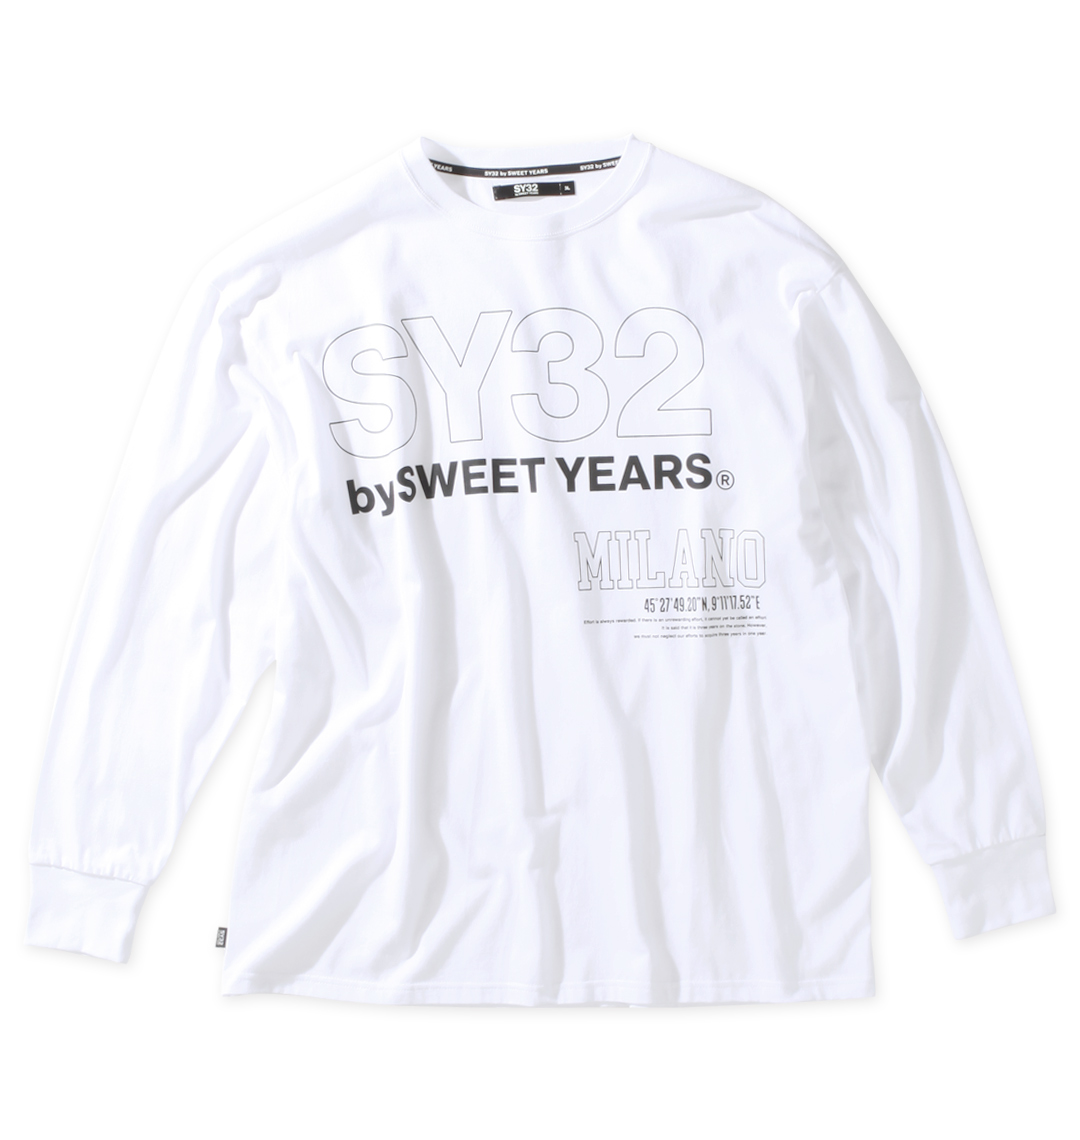 SY32 by SWEET YEARS スティックアウト ロゴ 長袖 Tシャツb-